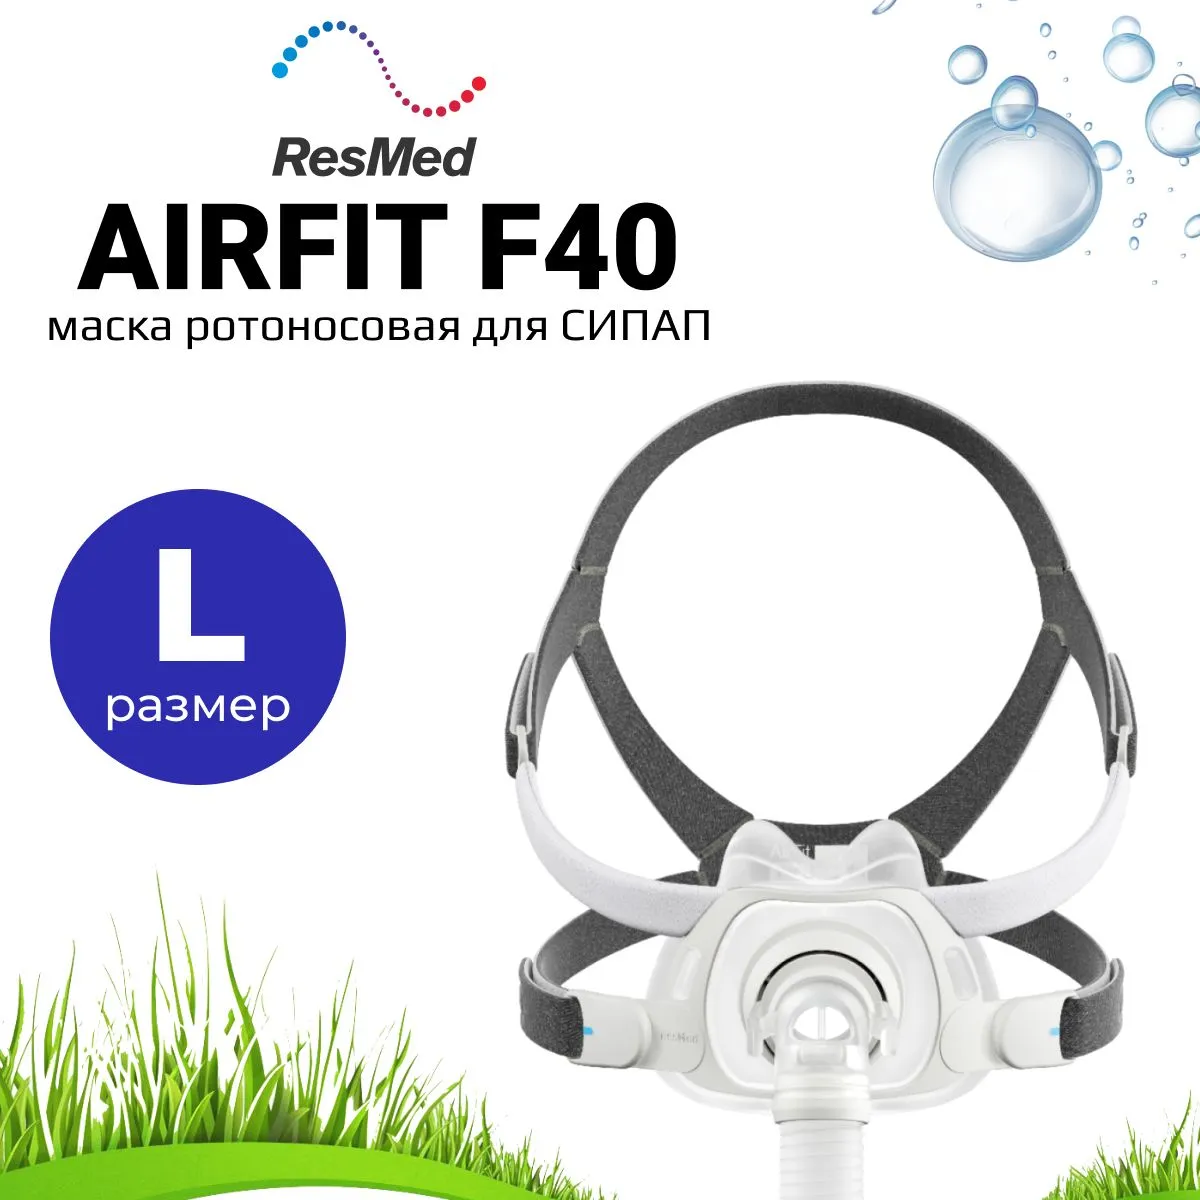 ResMed AirFit F40 QuietAir размер L ротоносовая маска для СИПАП